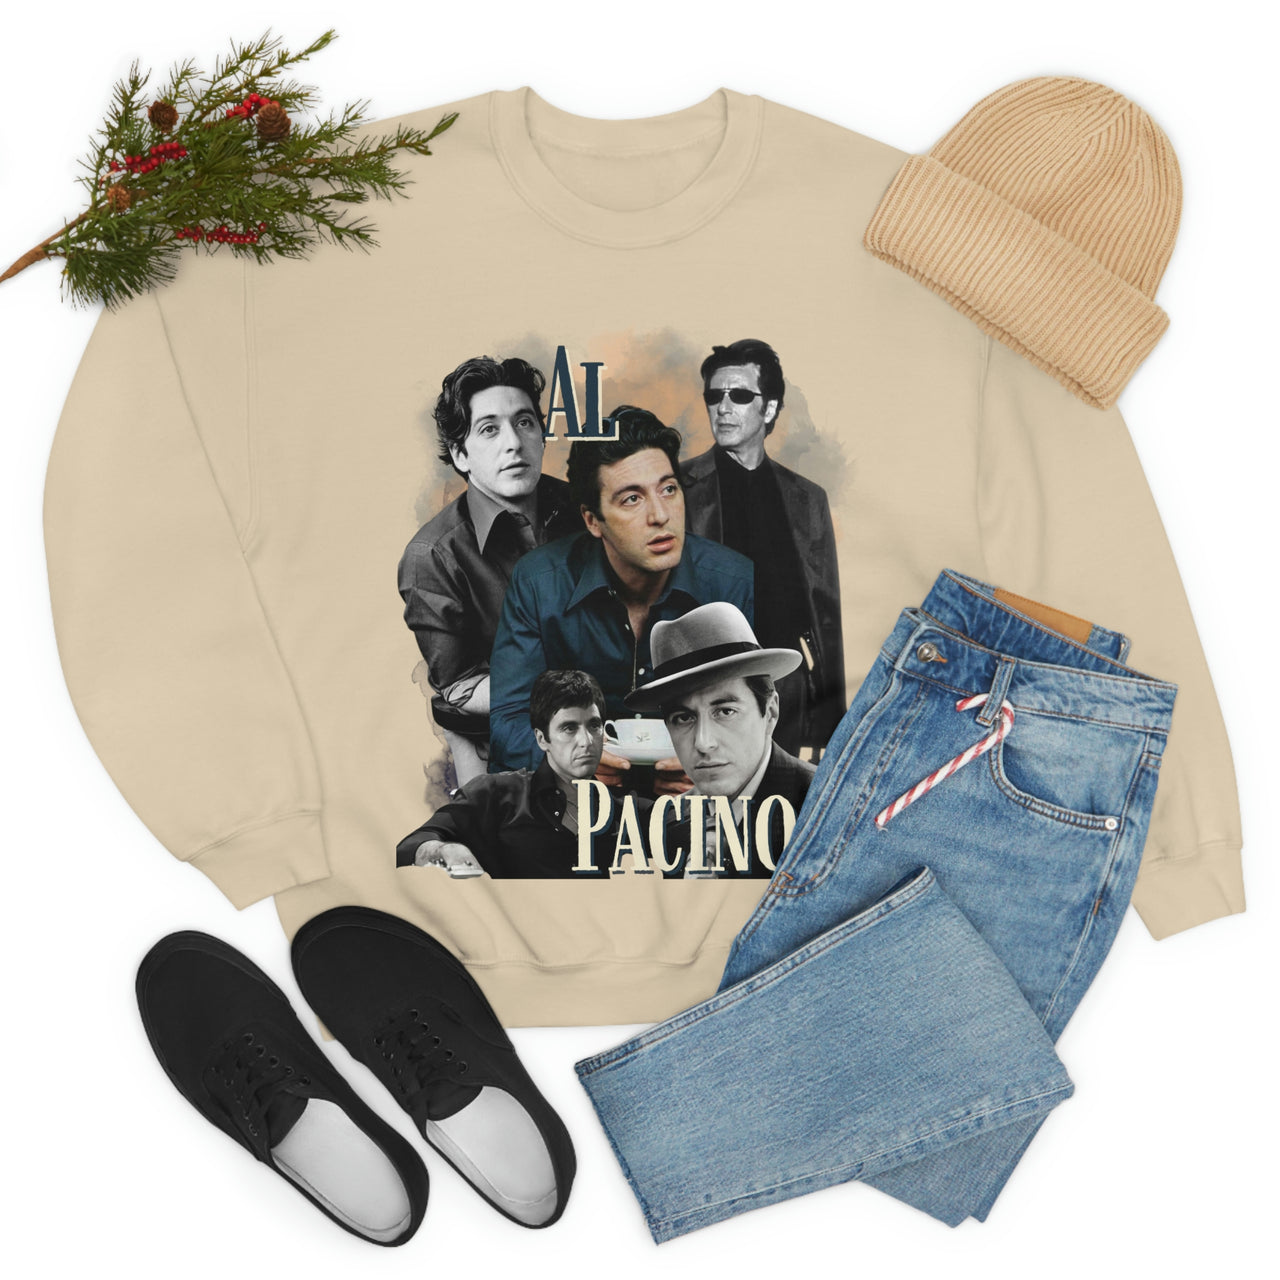 Al Pacino Sweatshirt, 90s Rap Style Bootleg The Godfather Pullover Crewneck, Scarface Movie Fan Gift